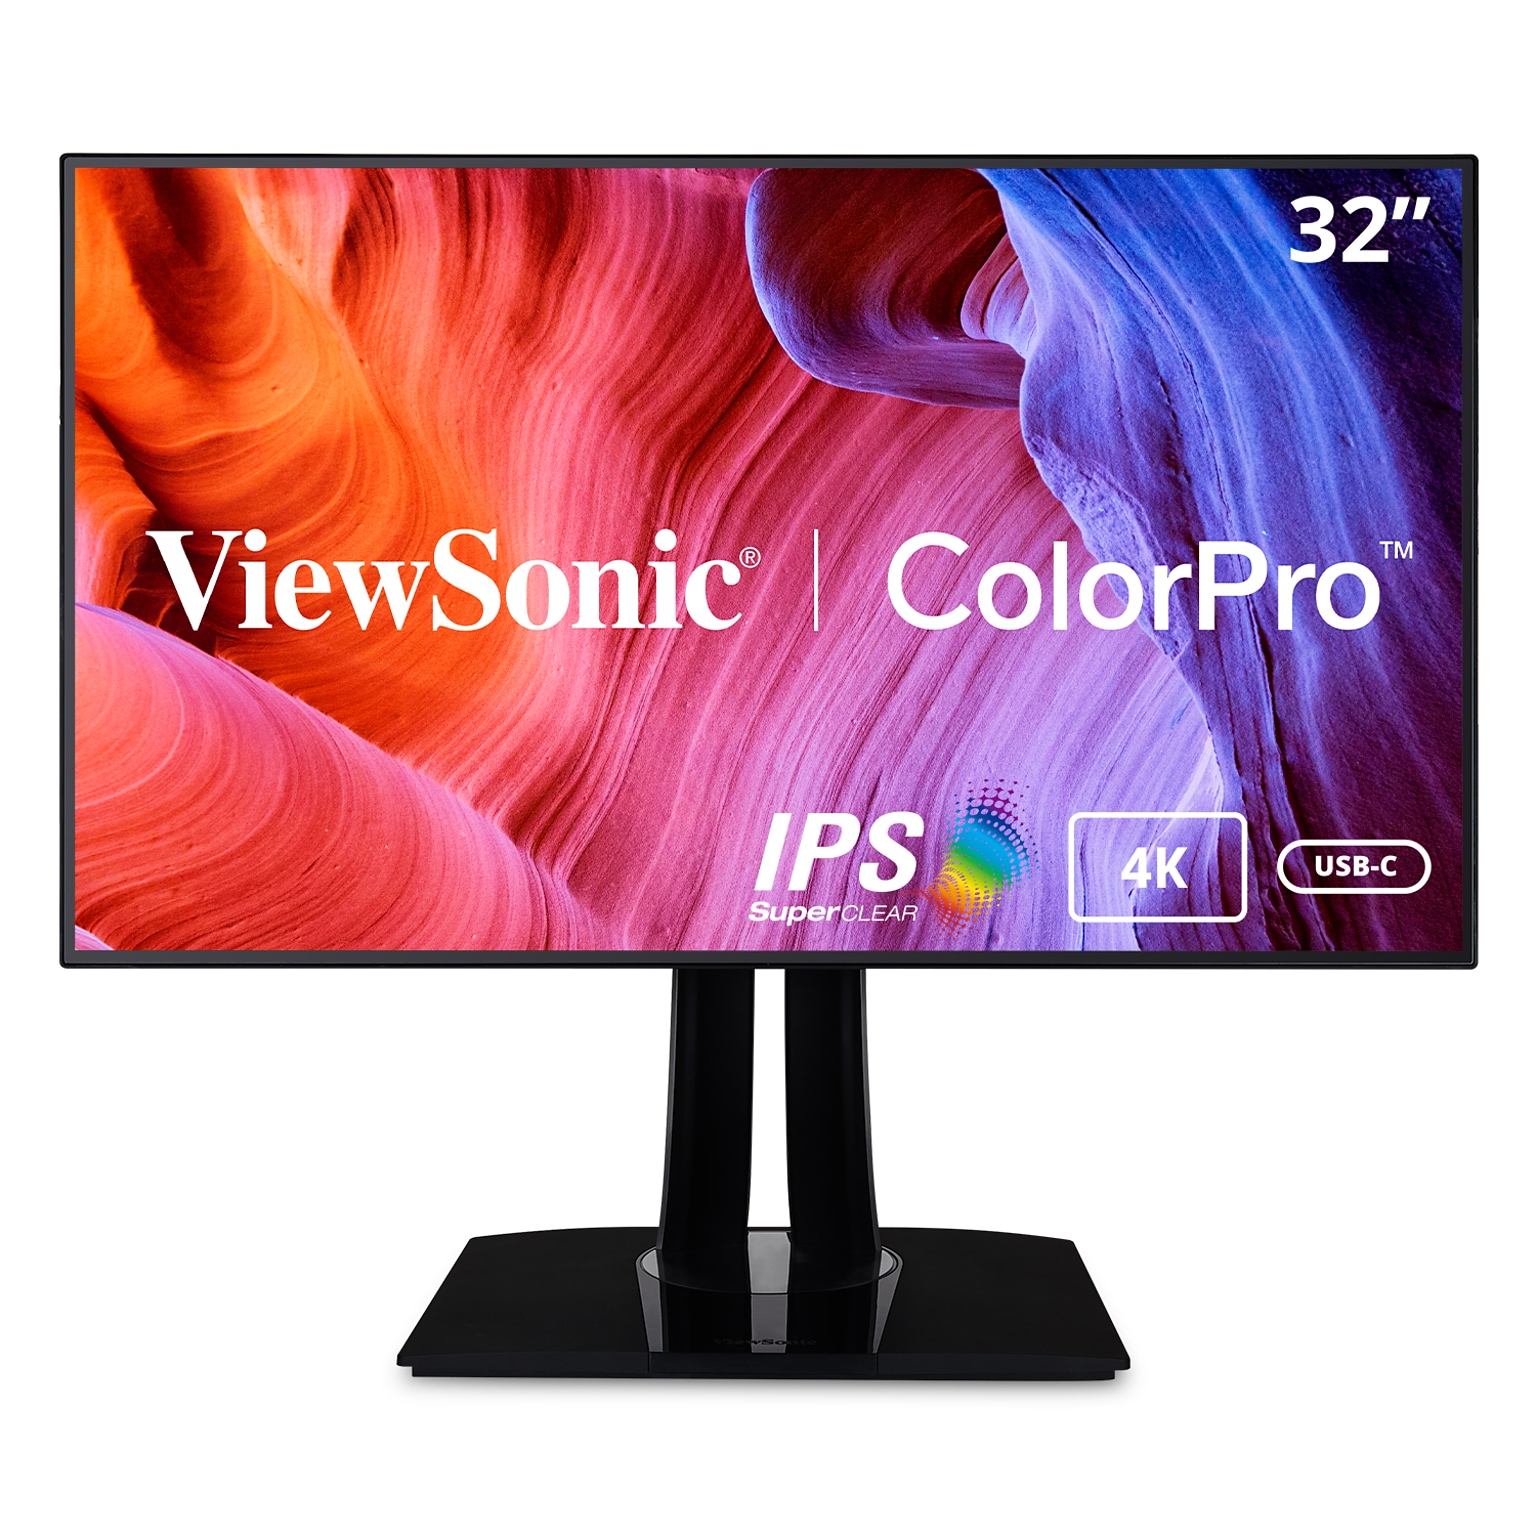 ViewSonic ColorPro 32 4K Ultra HD 60 Hz LED Monitor, Black (VP3268A-4K)